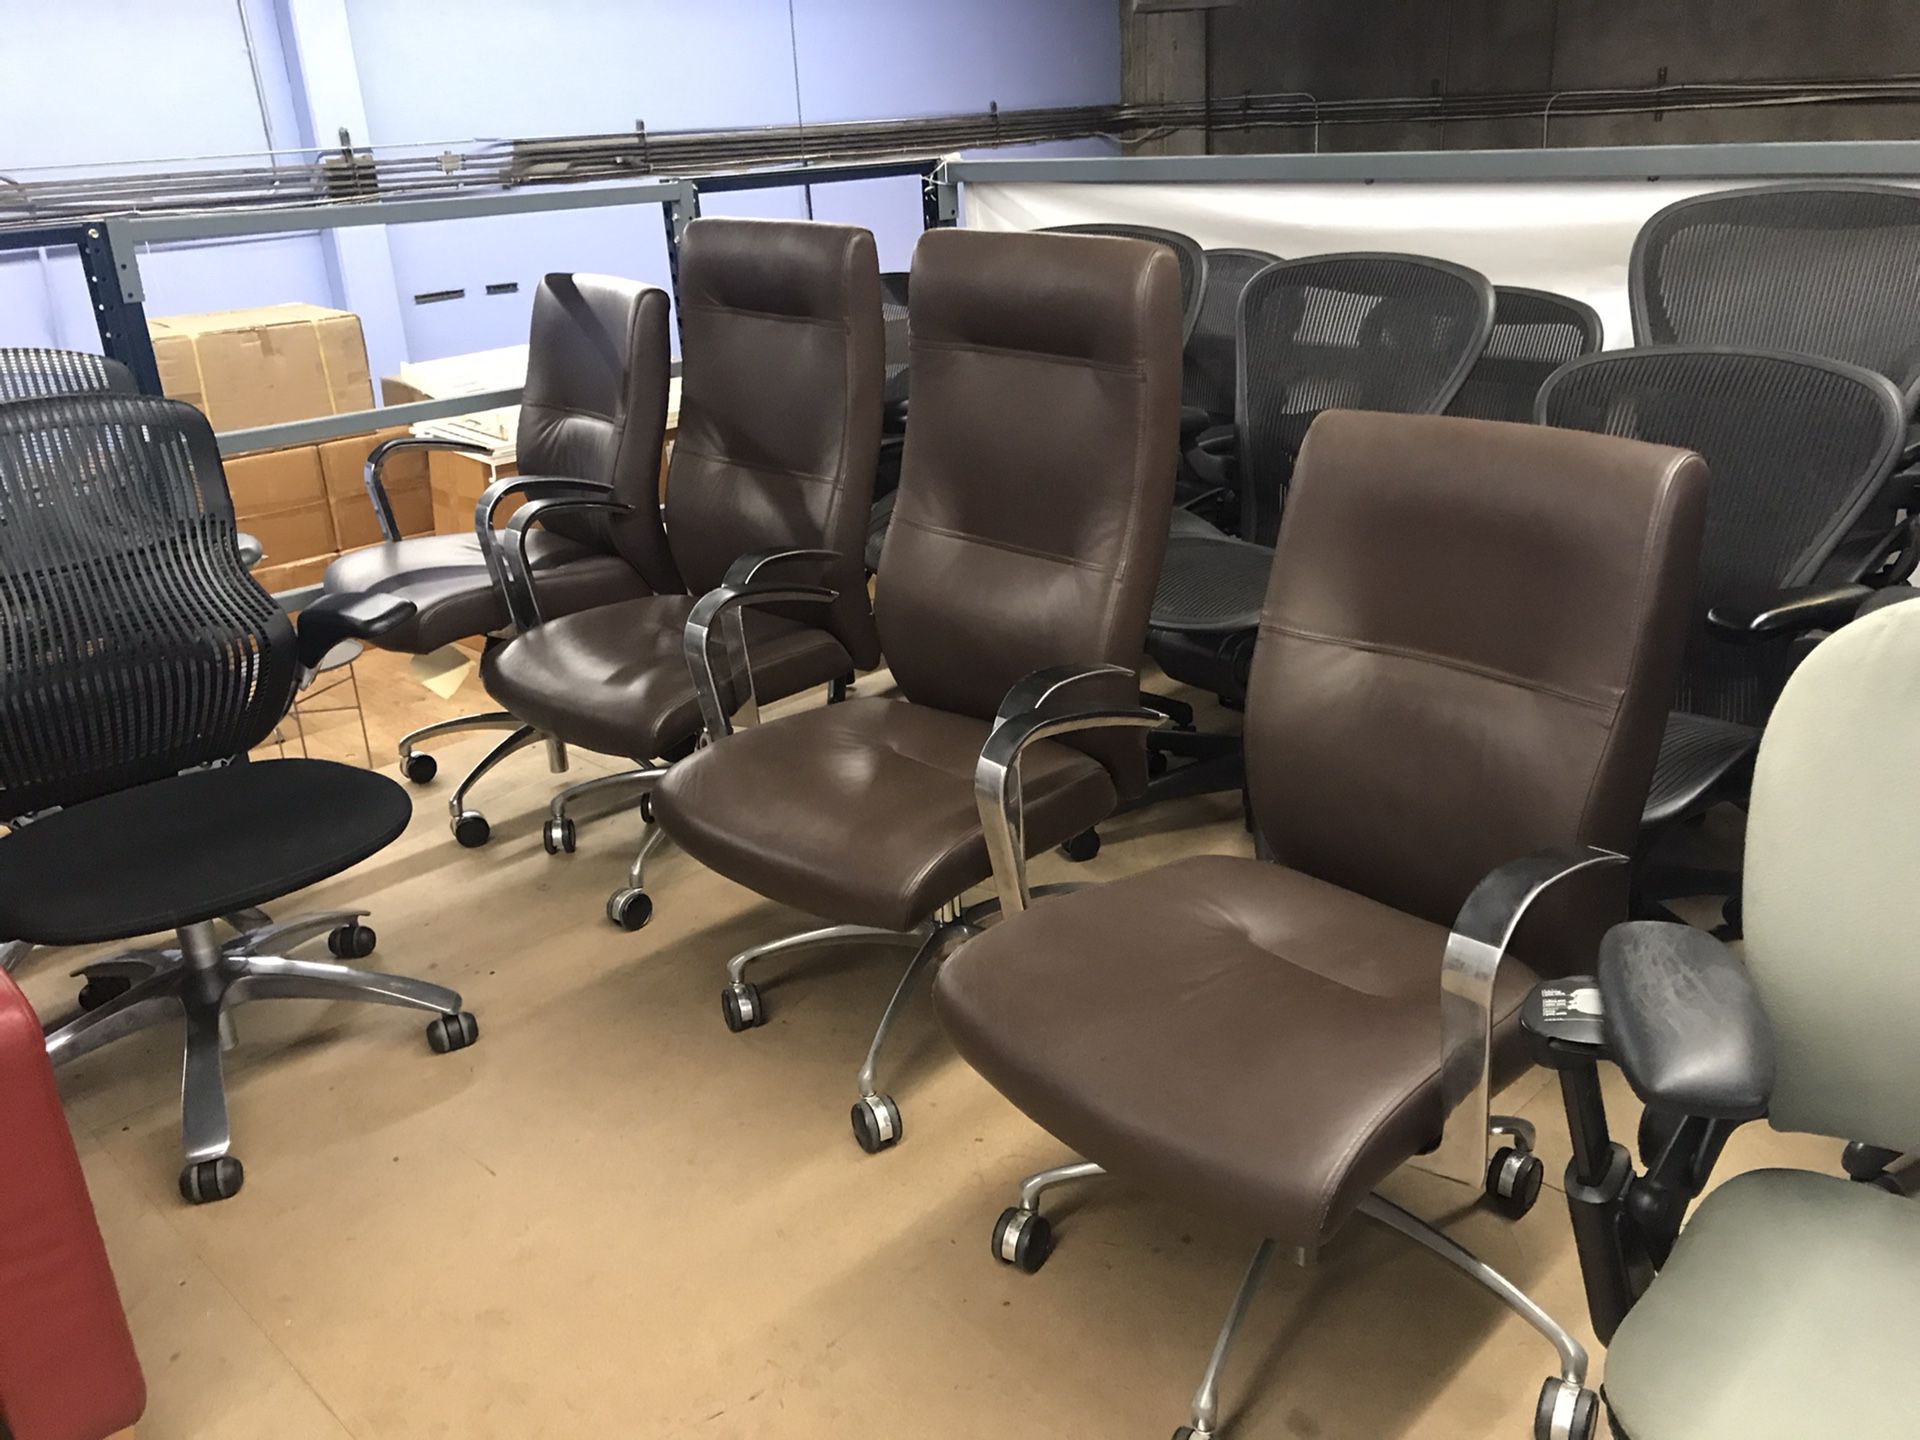 Ergonomic 9to5 office chairs